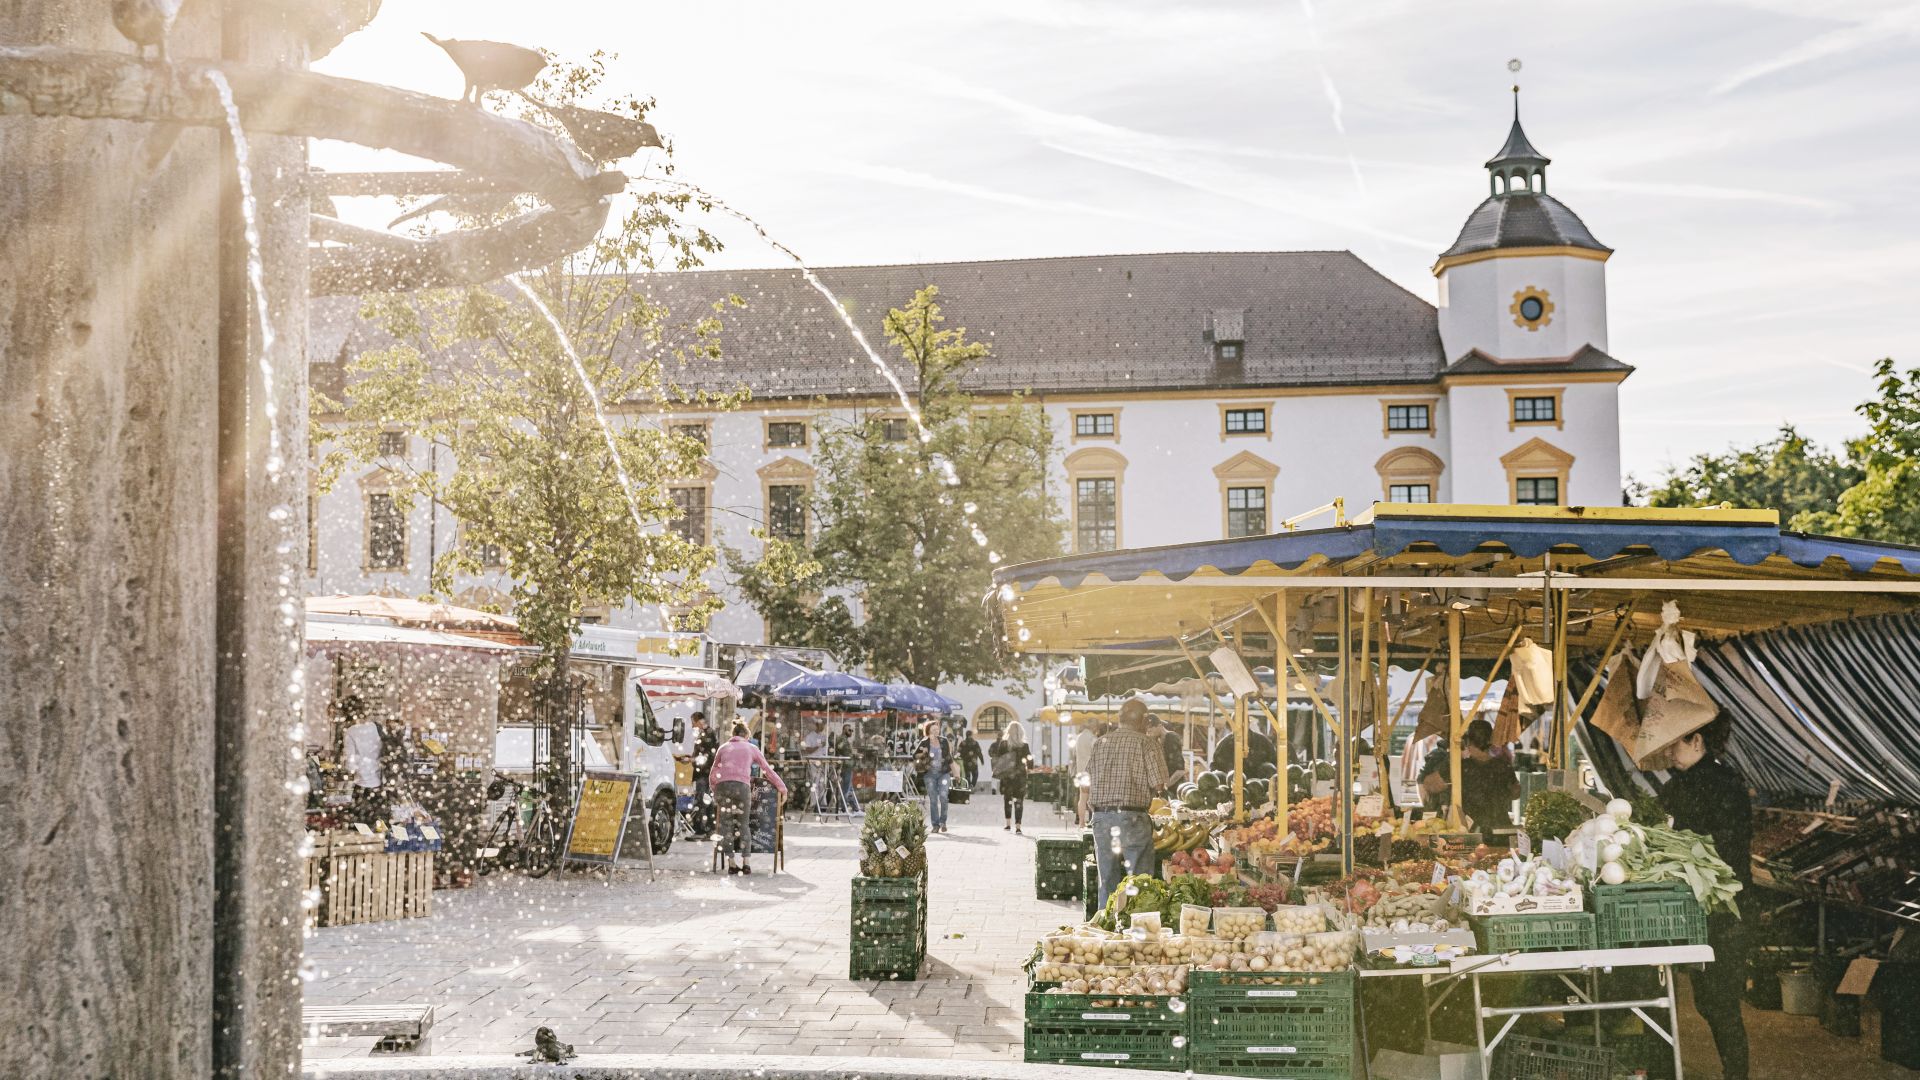 Kempten: Hildegardplatz with market stalls